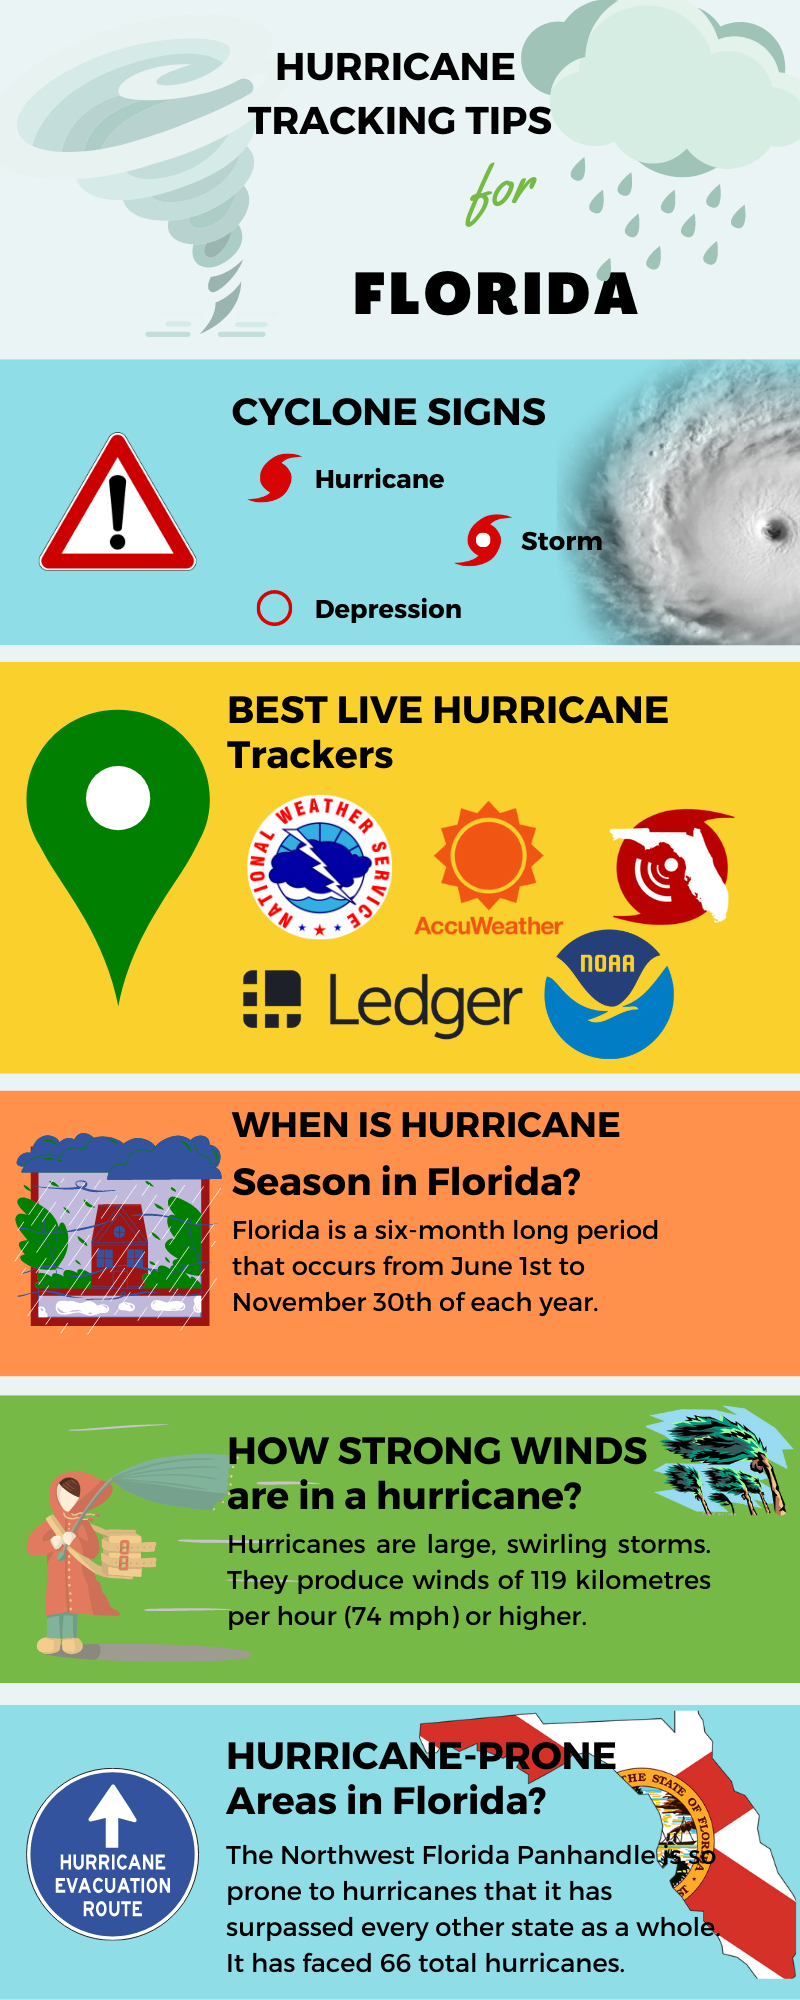 Hurricane Tracking Tips for Florida